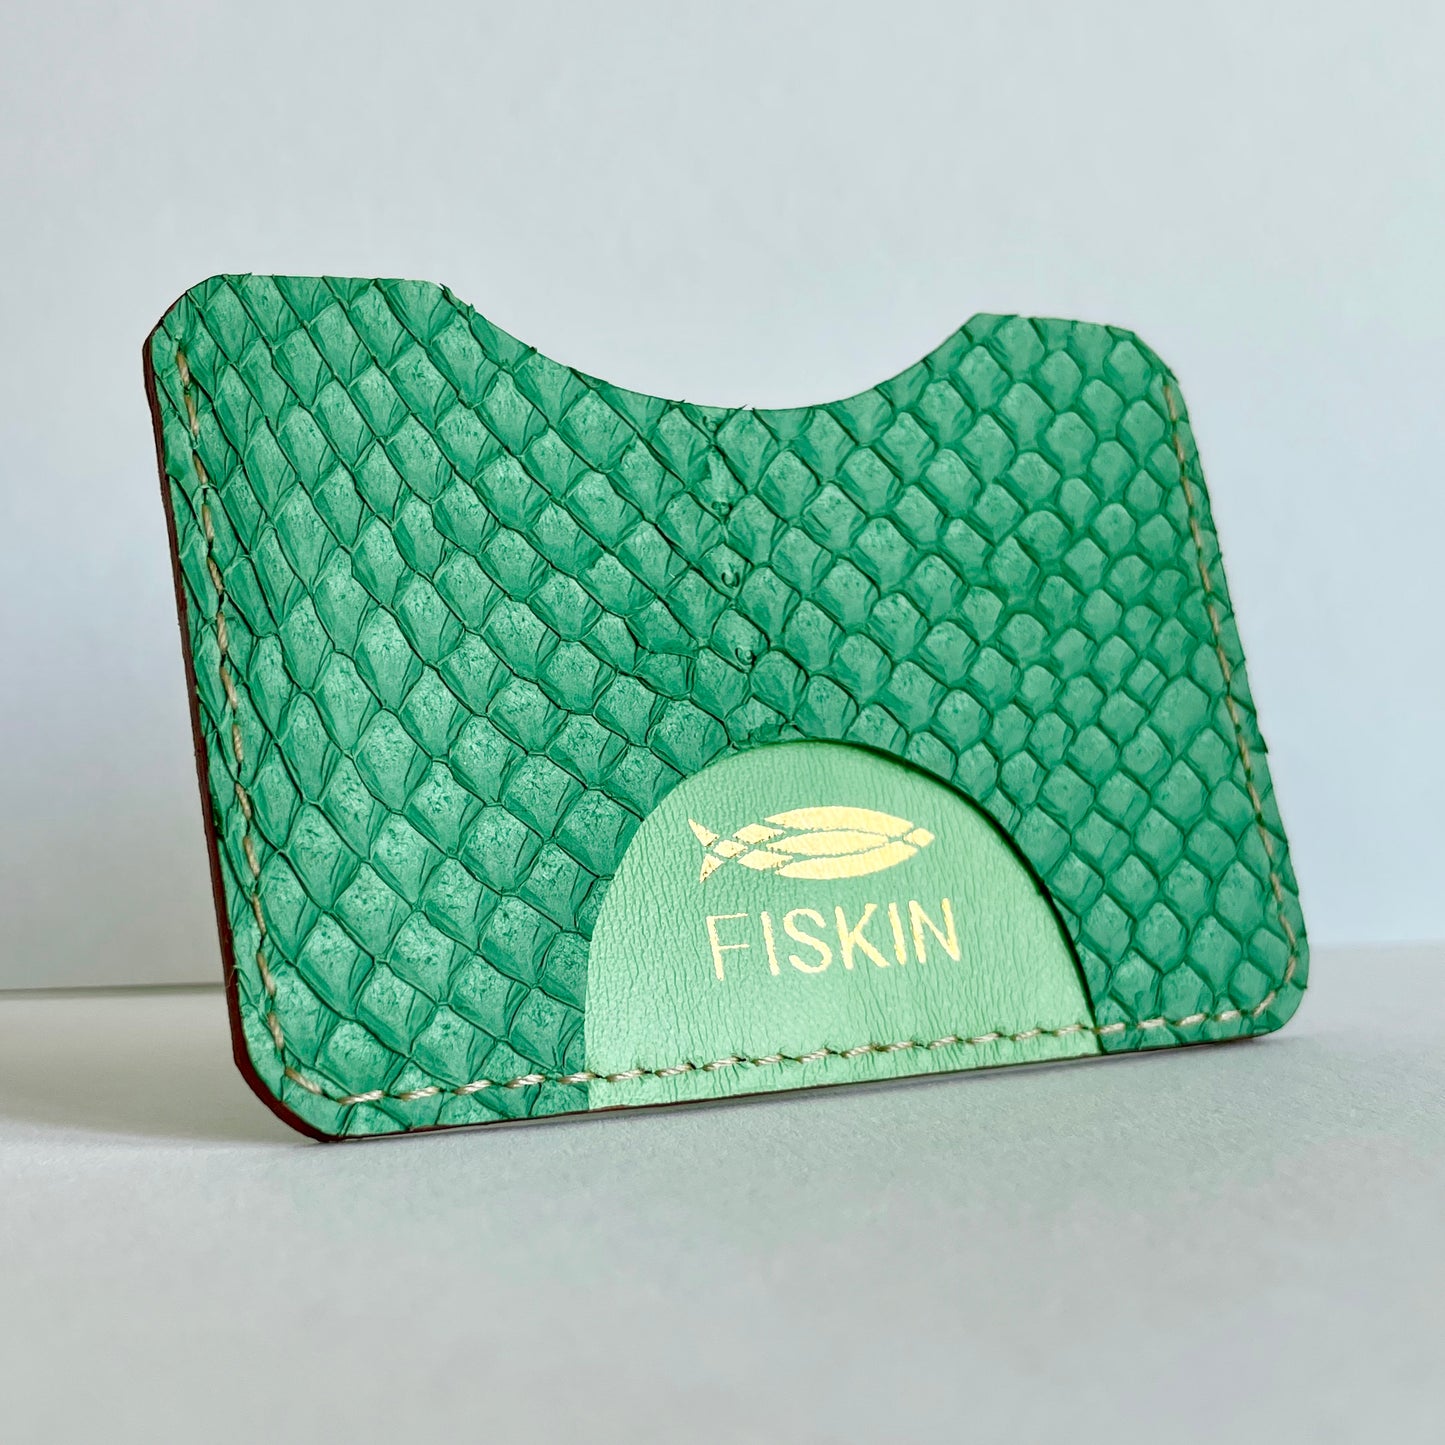 Fish leather cardholder, green summer